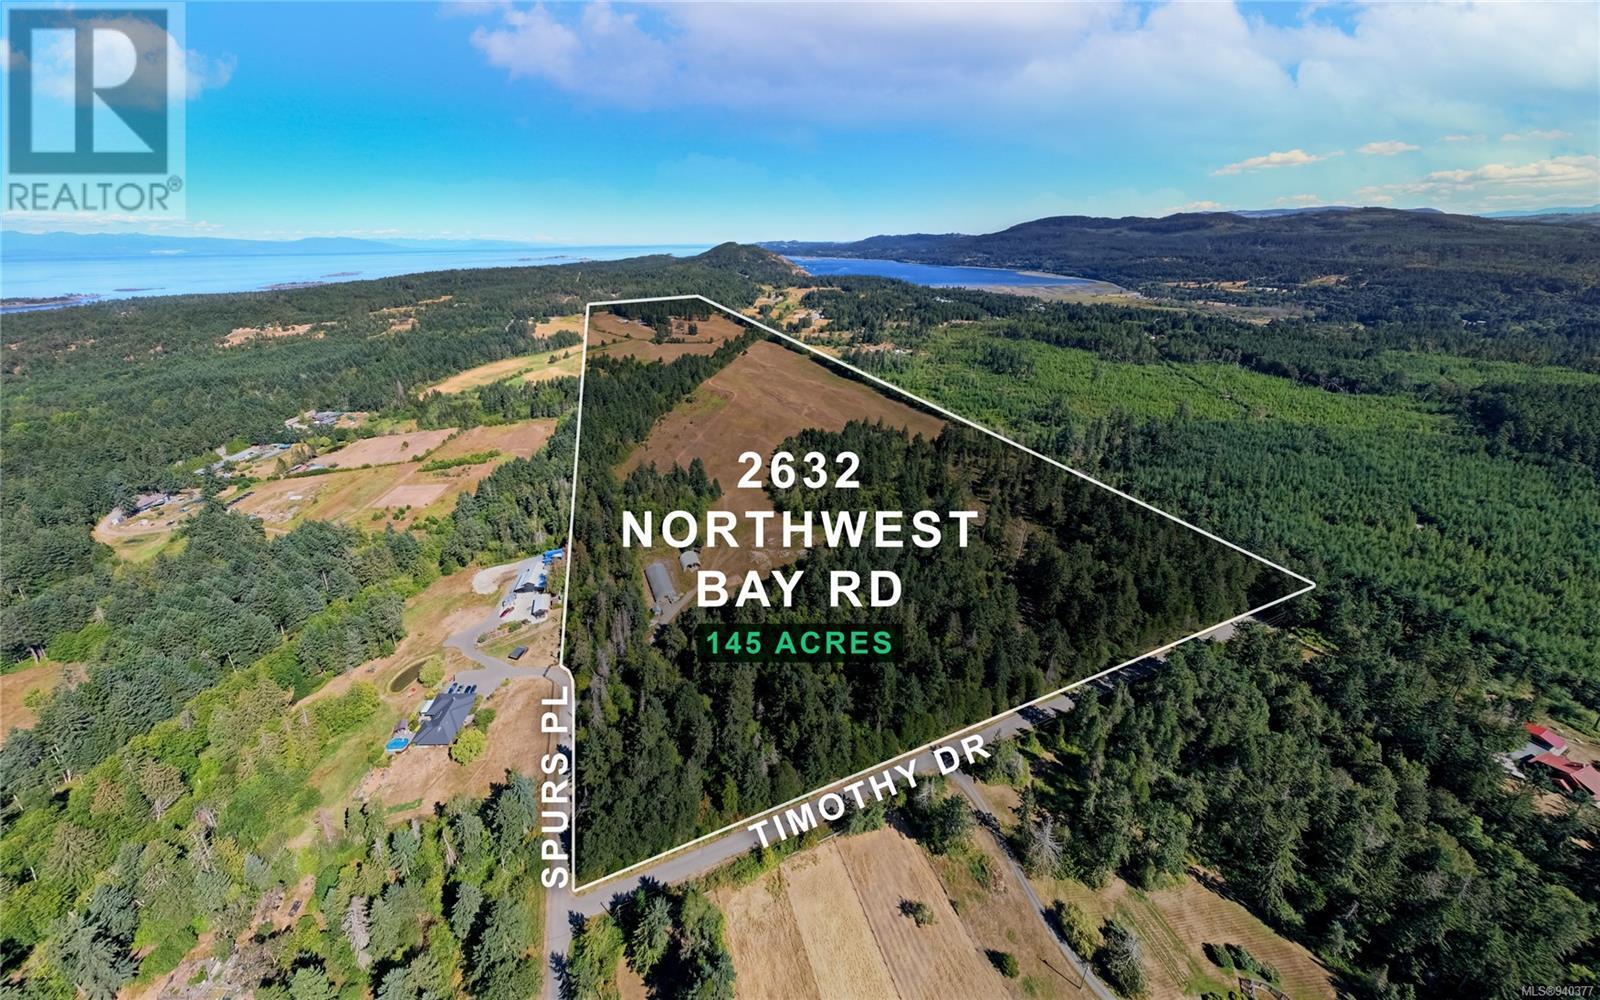 












2632 Northwest Bay Rd

,
Nanoose Bay,




British Columbia
V9P9E7

